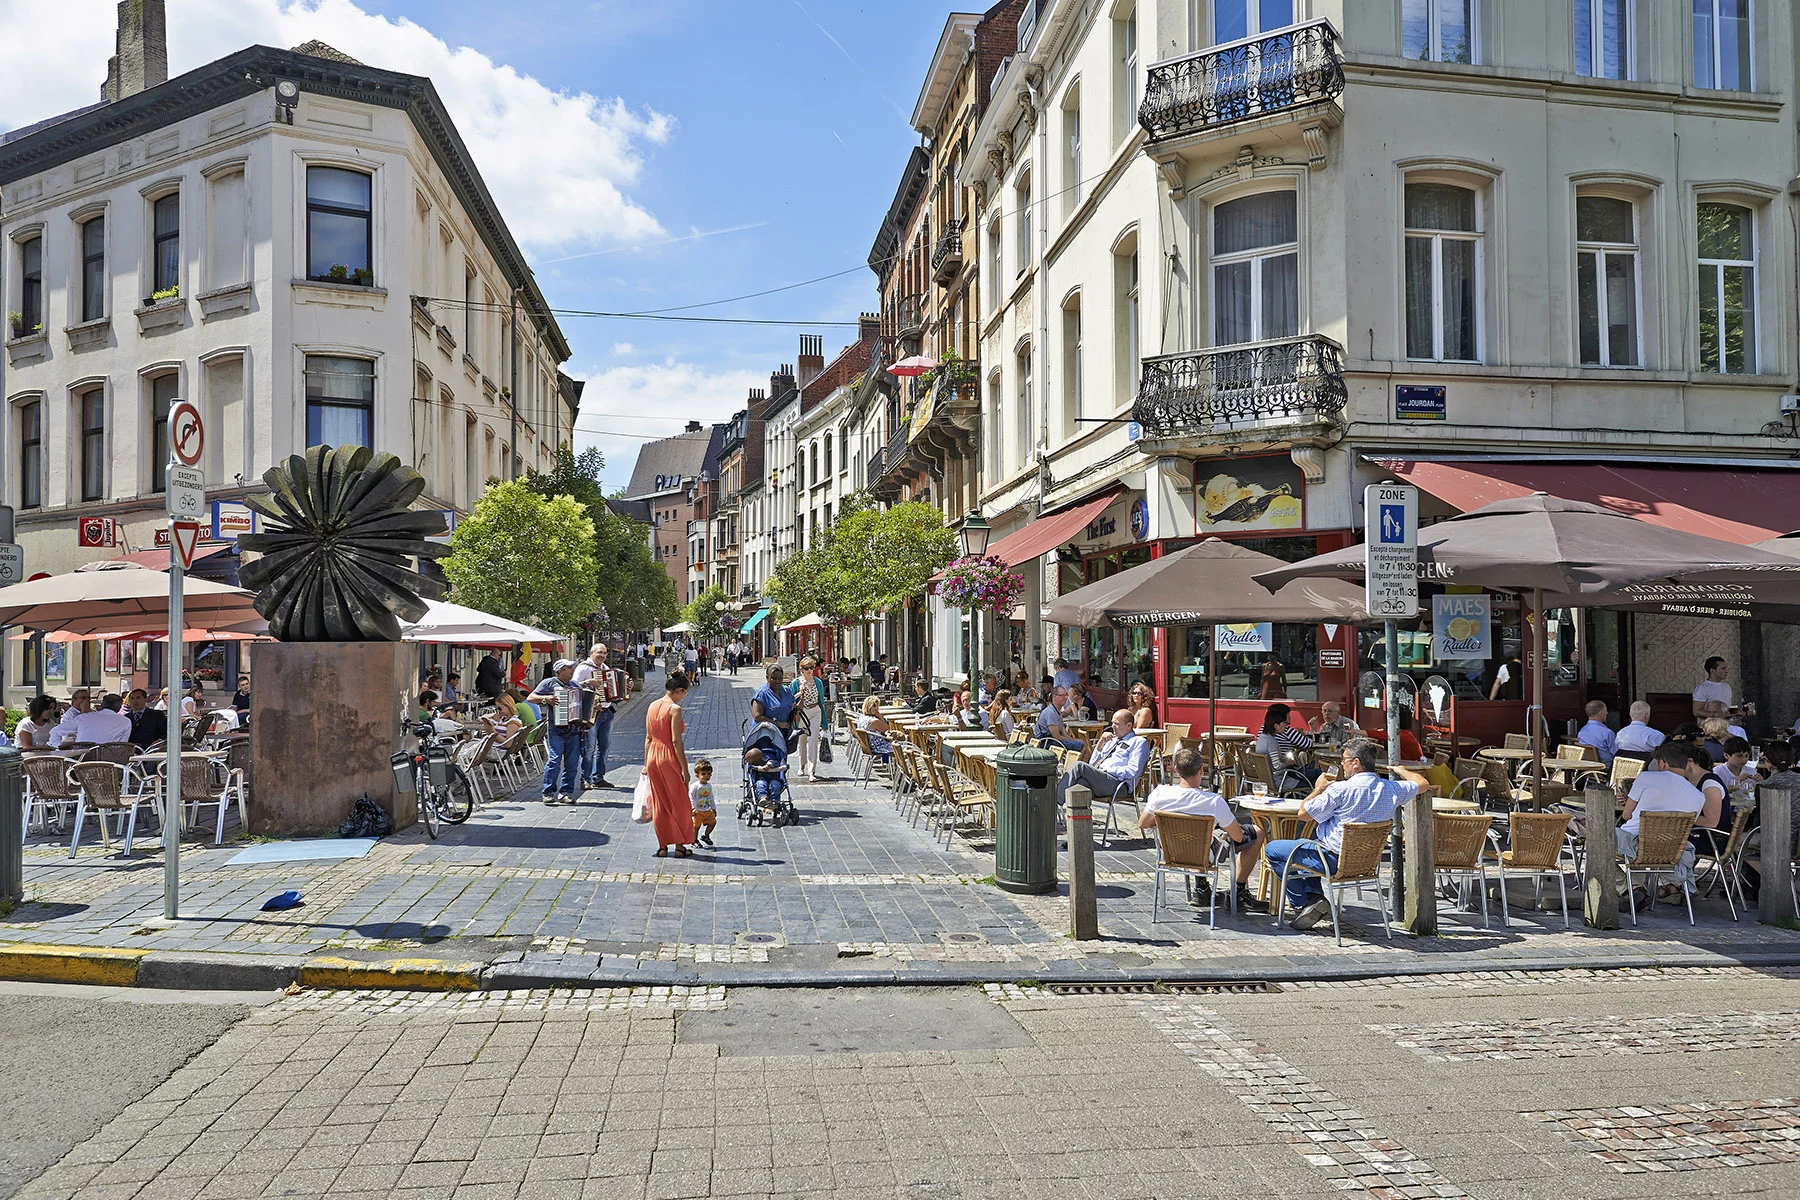 Etterbeek, one of the main neighborhoods of Brussels